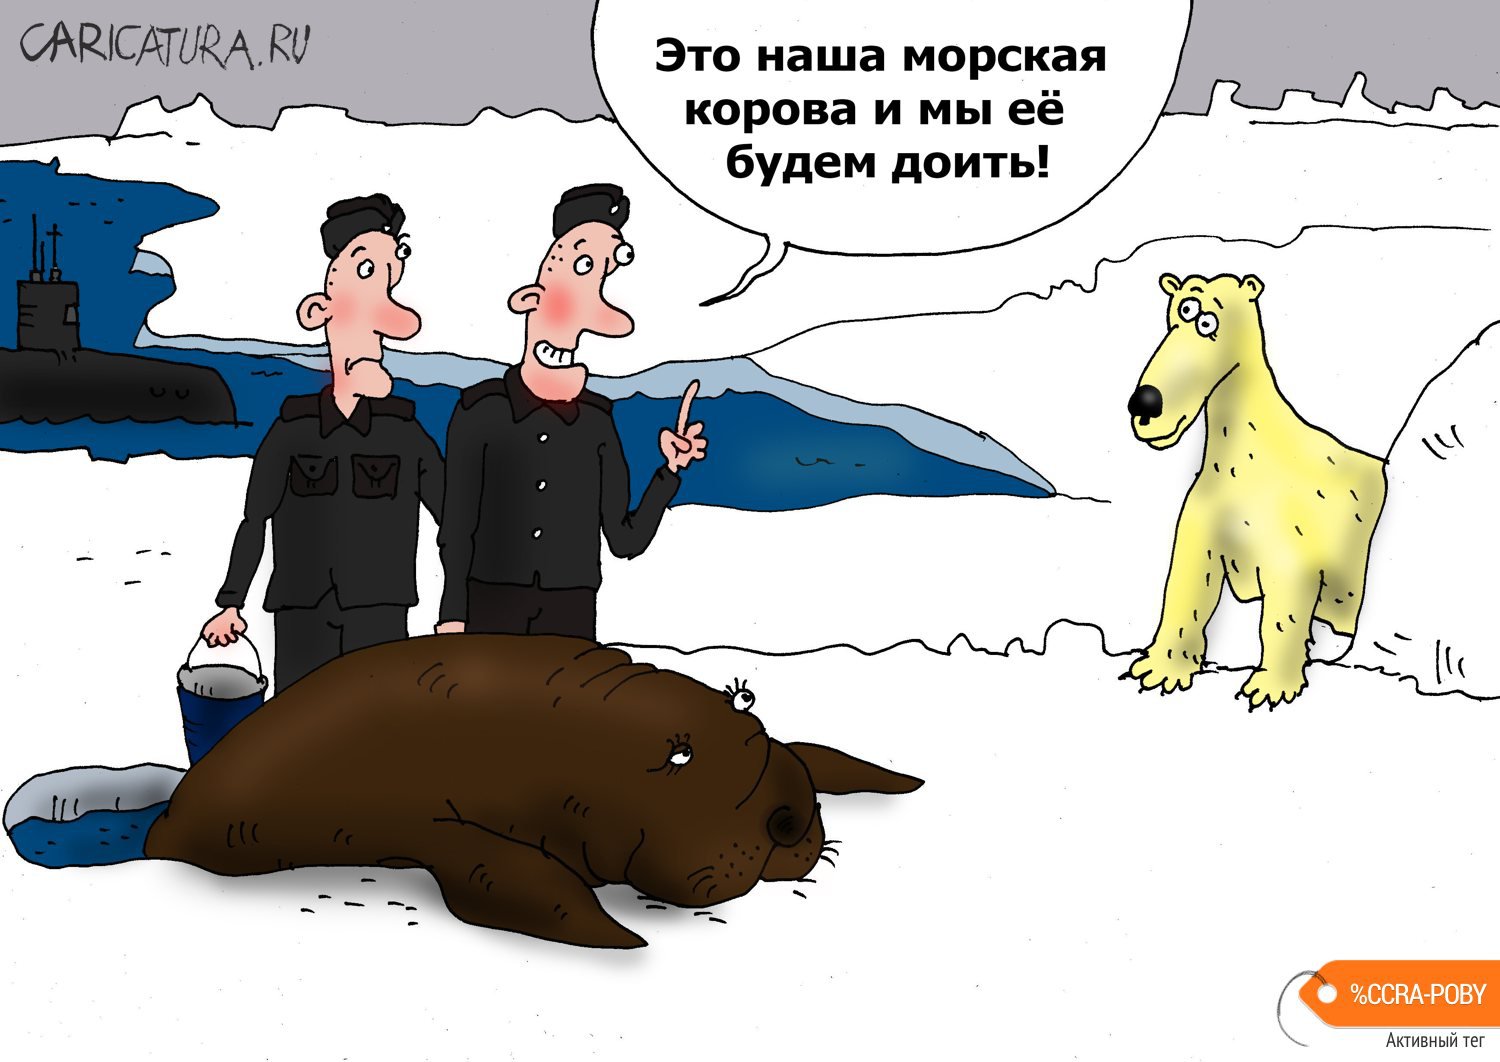 Карикатура "Такая корова", Валерий Тарасенко